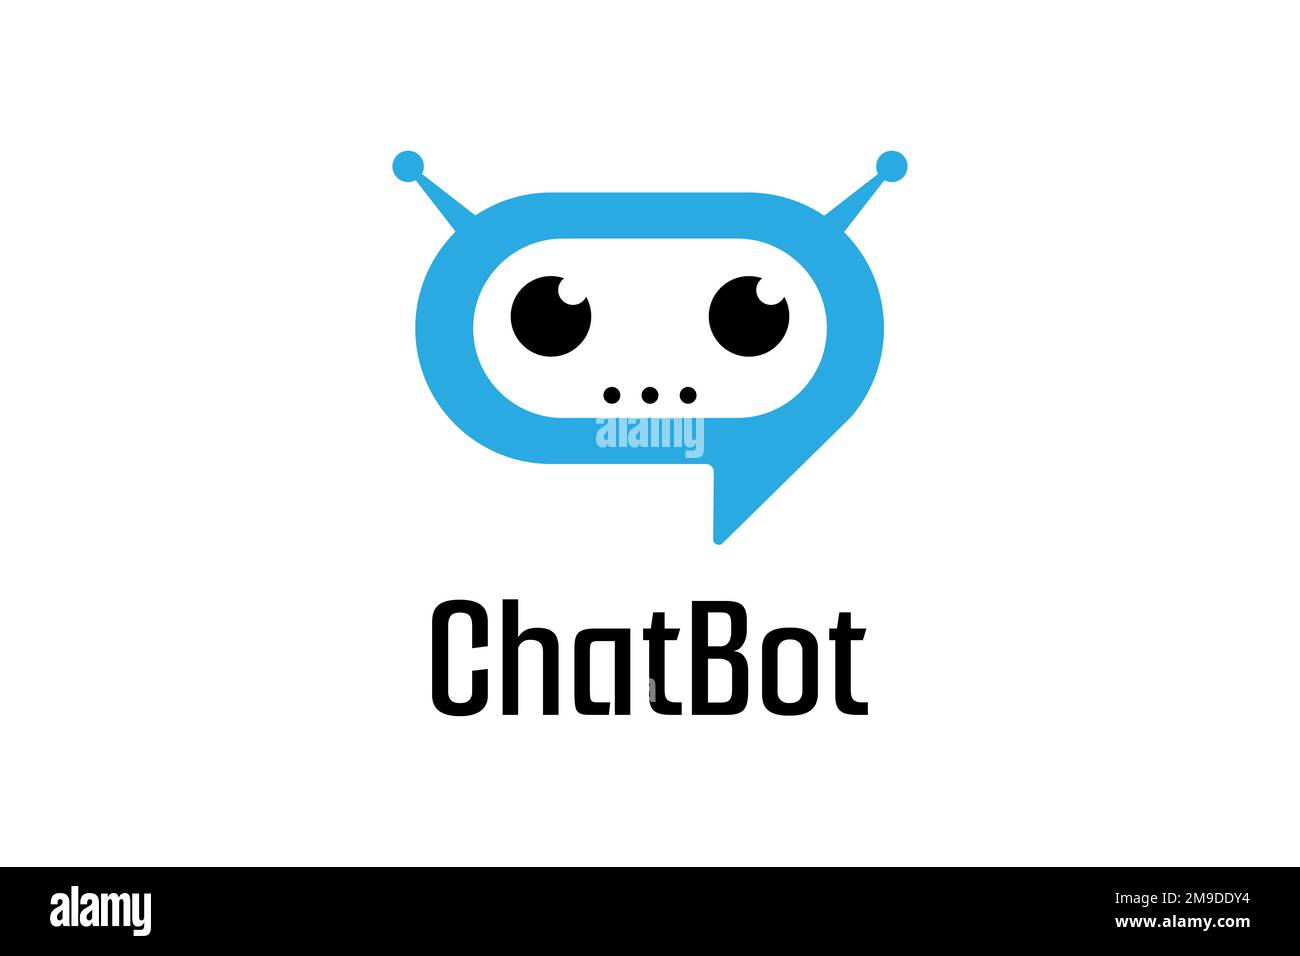 12+ Thousand Chat Bot Logo Royalty-Free Images, Stock Photos